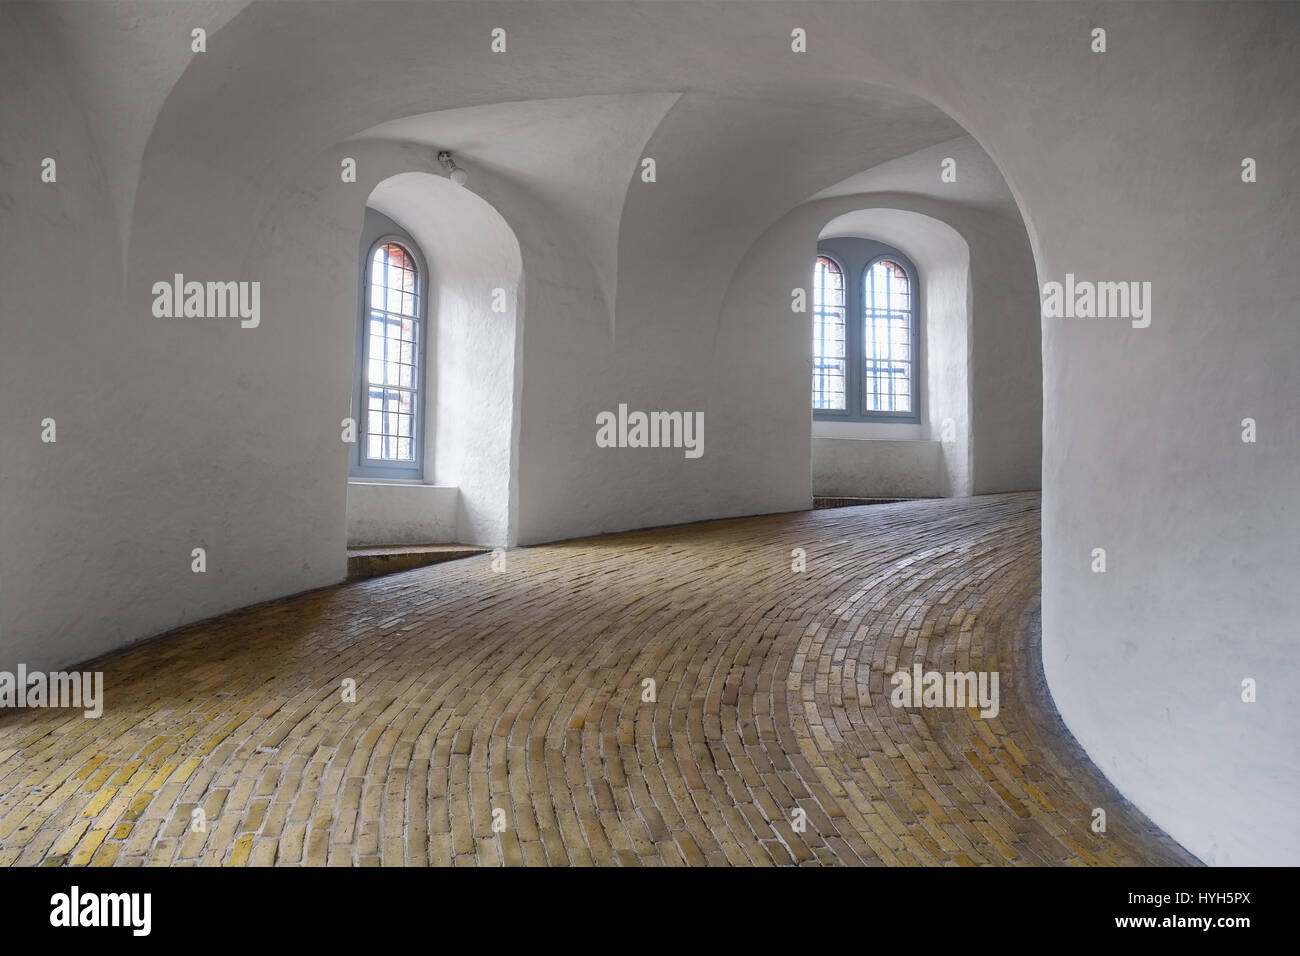 COPENHAGEN, DENMARK - AUGUST 22, 2014: Inside view of the spiral ramp of Round tower in Copenhagen, Denmark.  The Round tower was built as an astronom Stock Photo